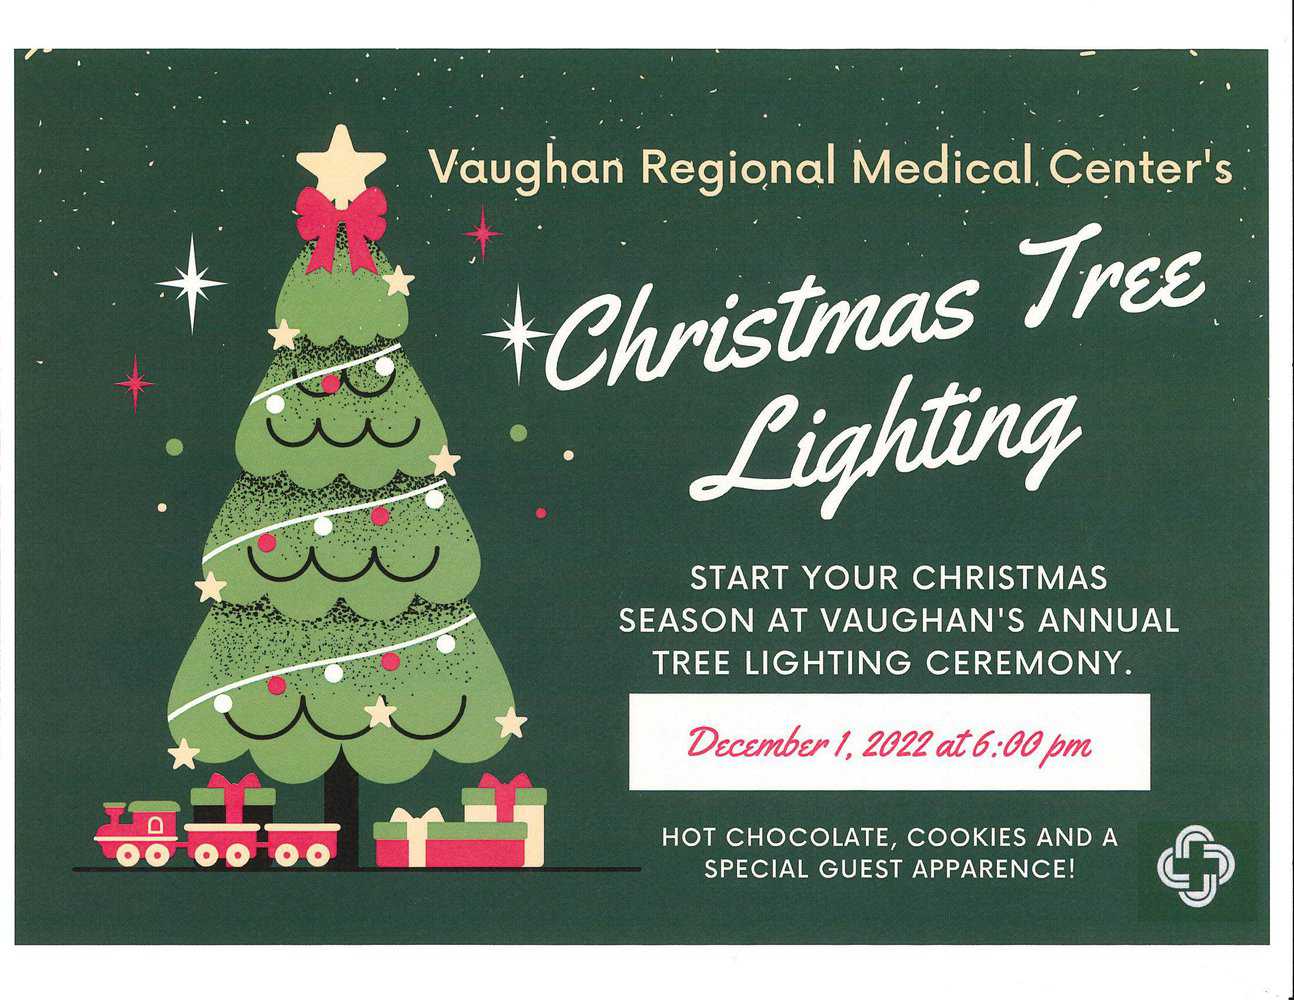 VRMC Christmas Tree Lighting